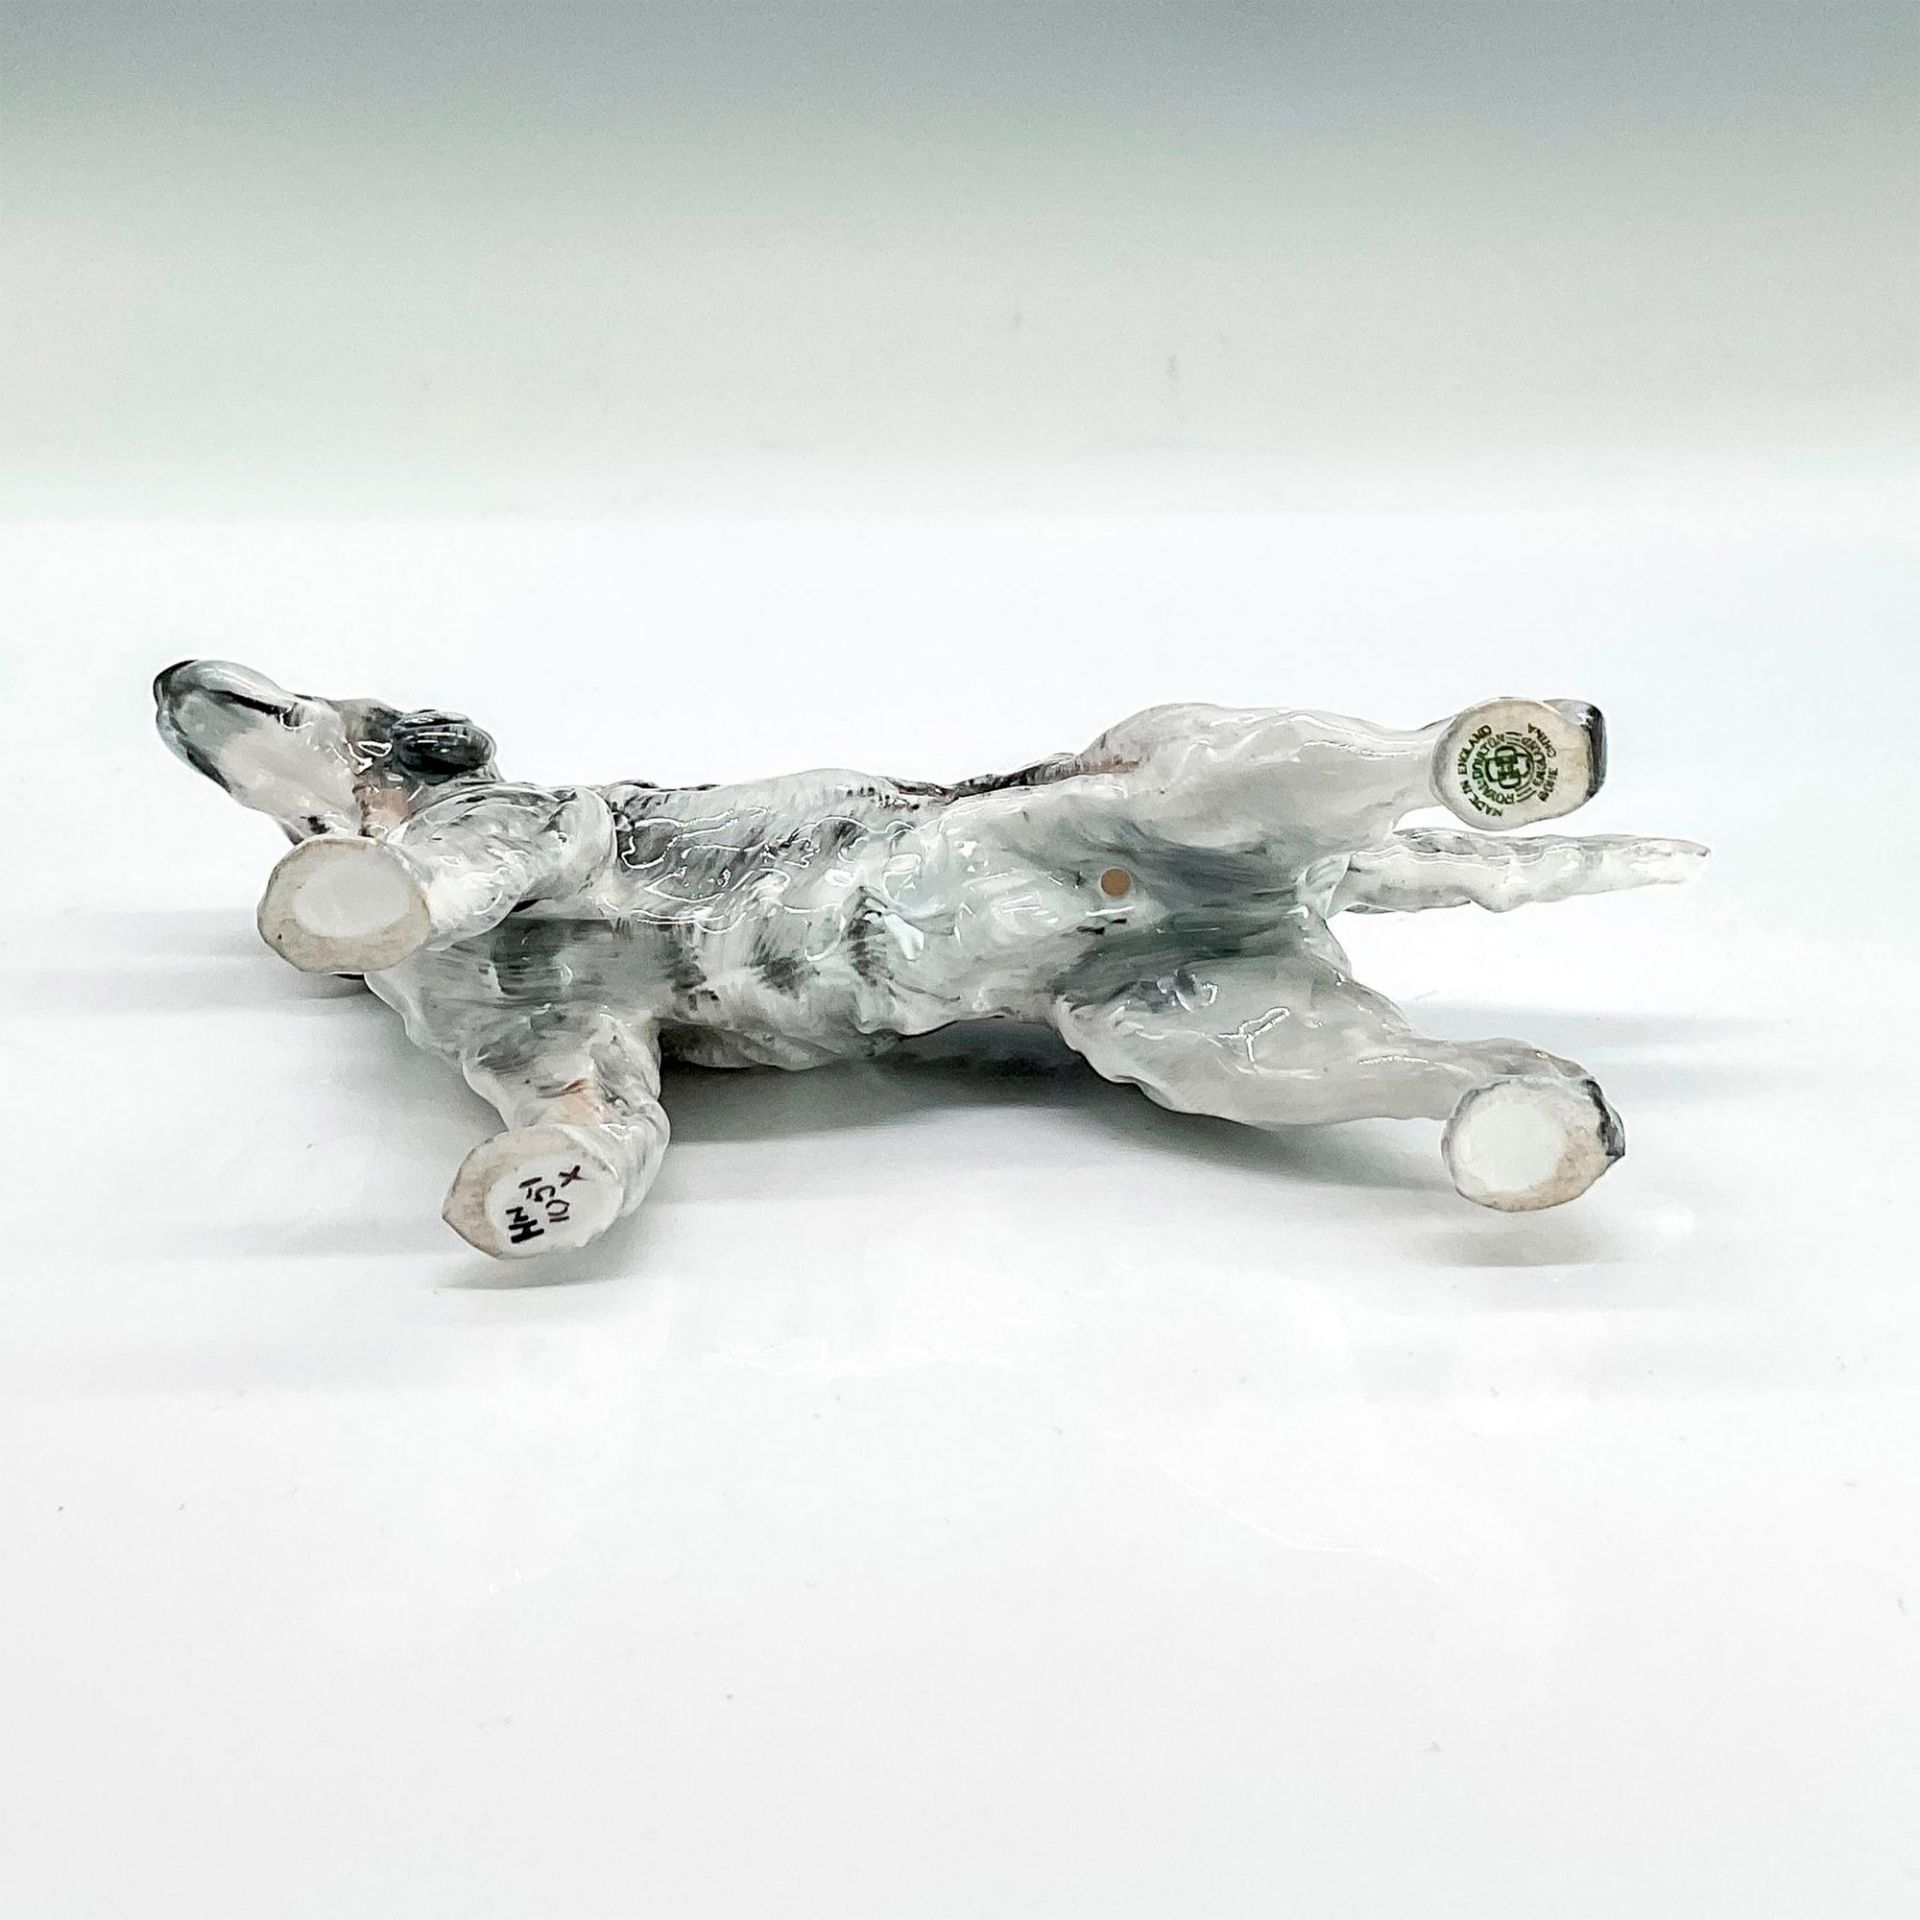 English Setter HN1051 - Royal Doulton Figurine - Image 3 of 3